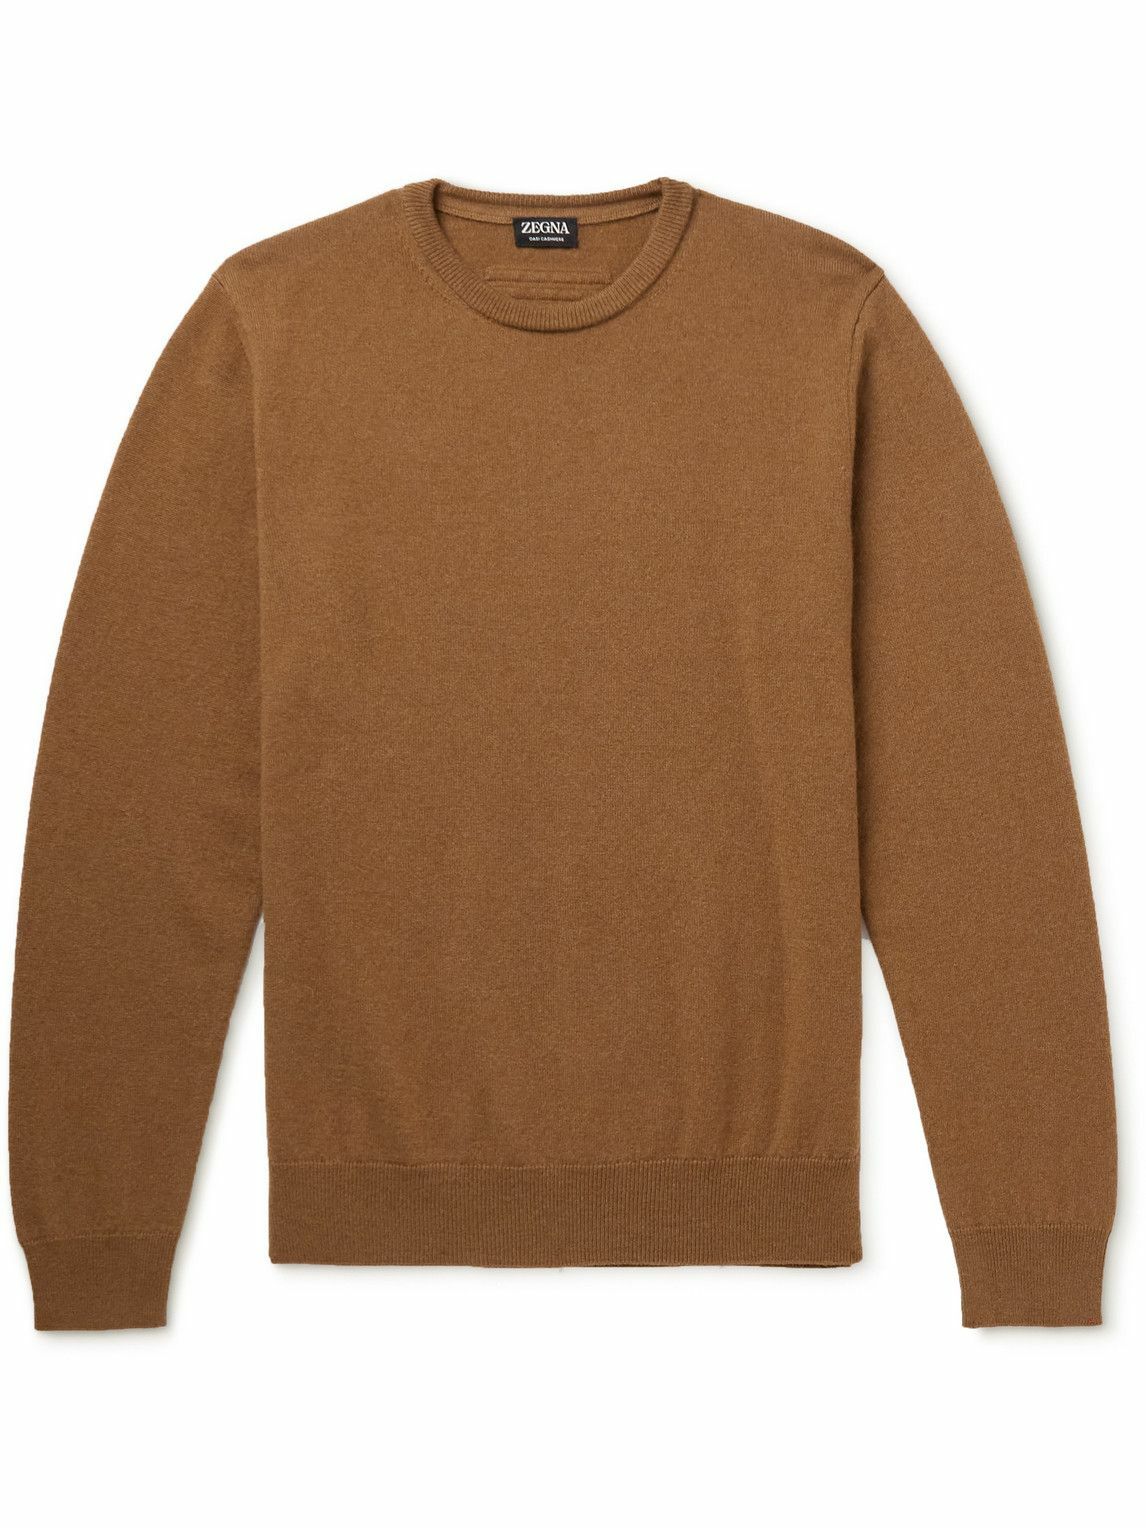 Zegna - Slim-Fit Cashmere Sweater - Brown Zegna